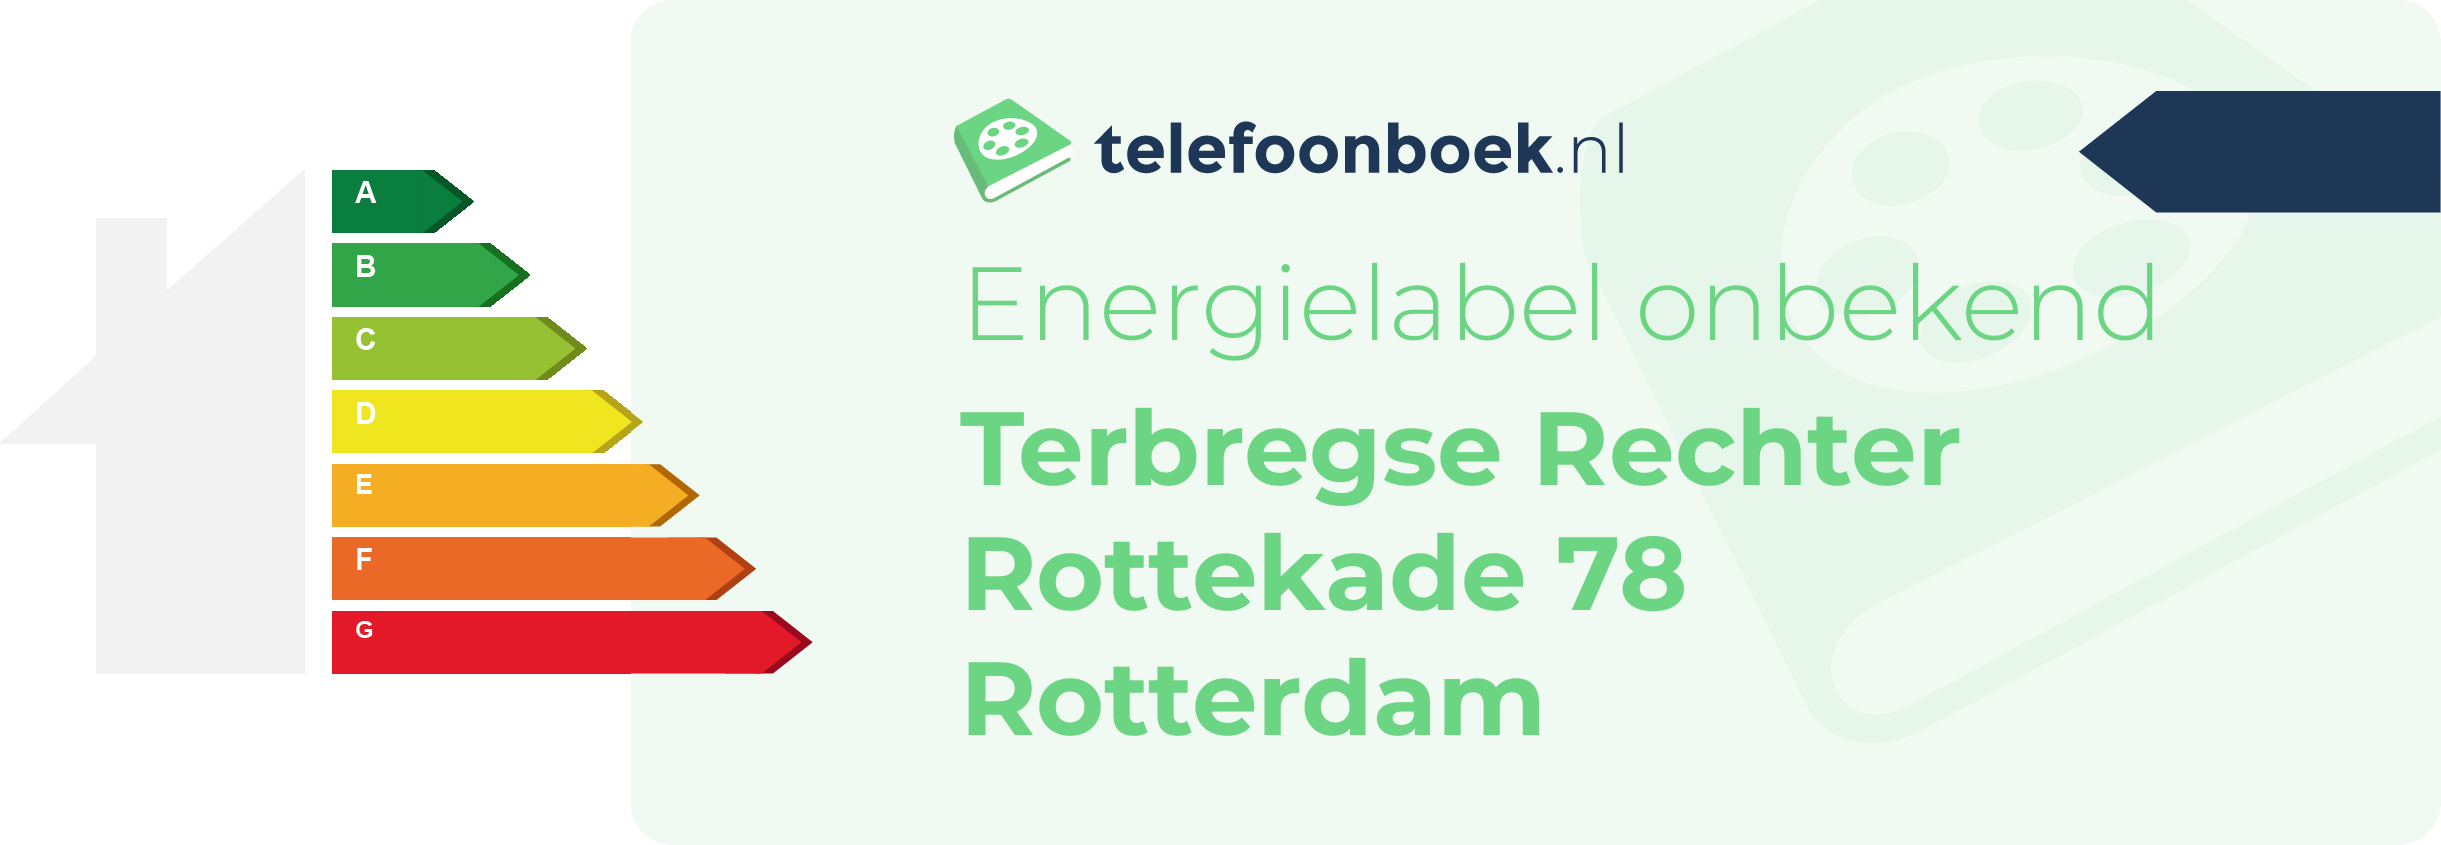 Energielabel Terbregse Rechter Rottekade 78 Rotterdam